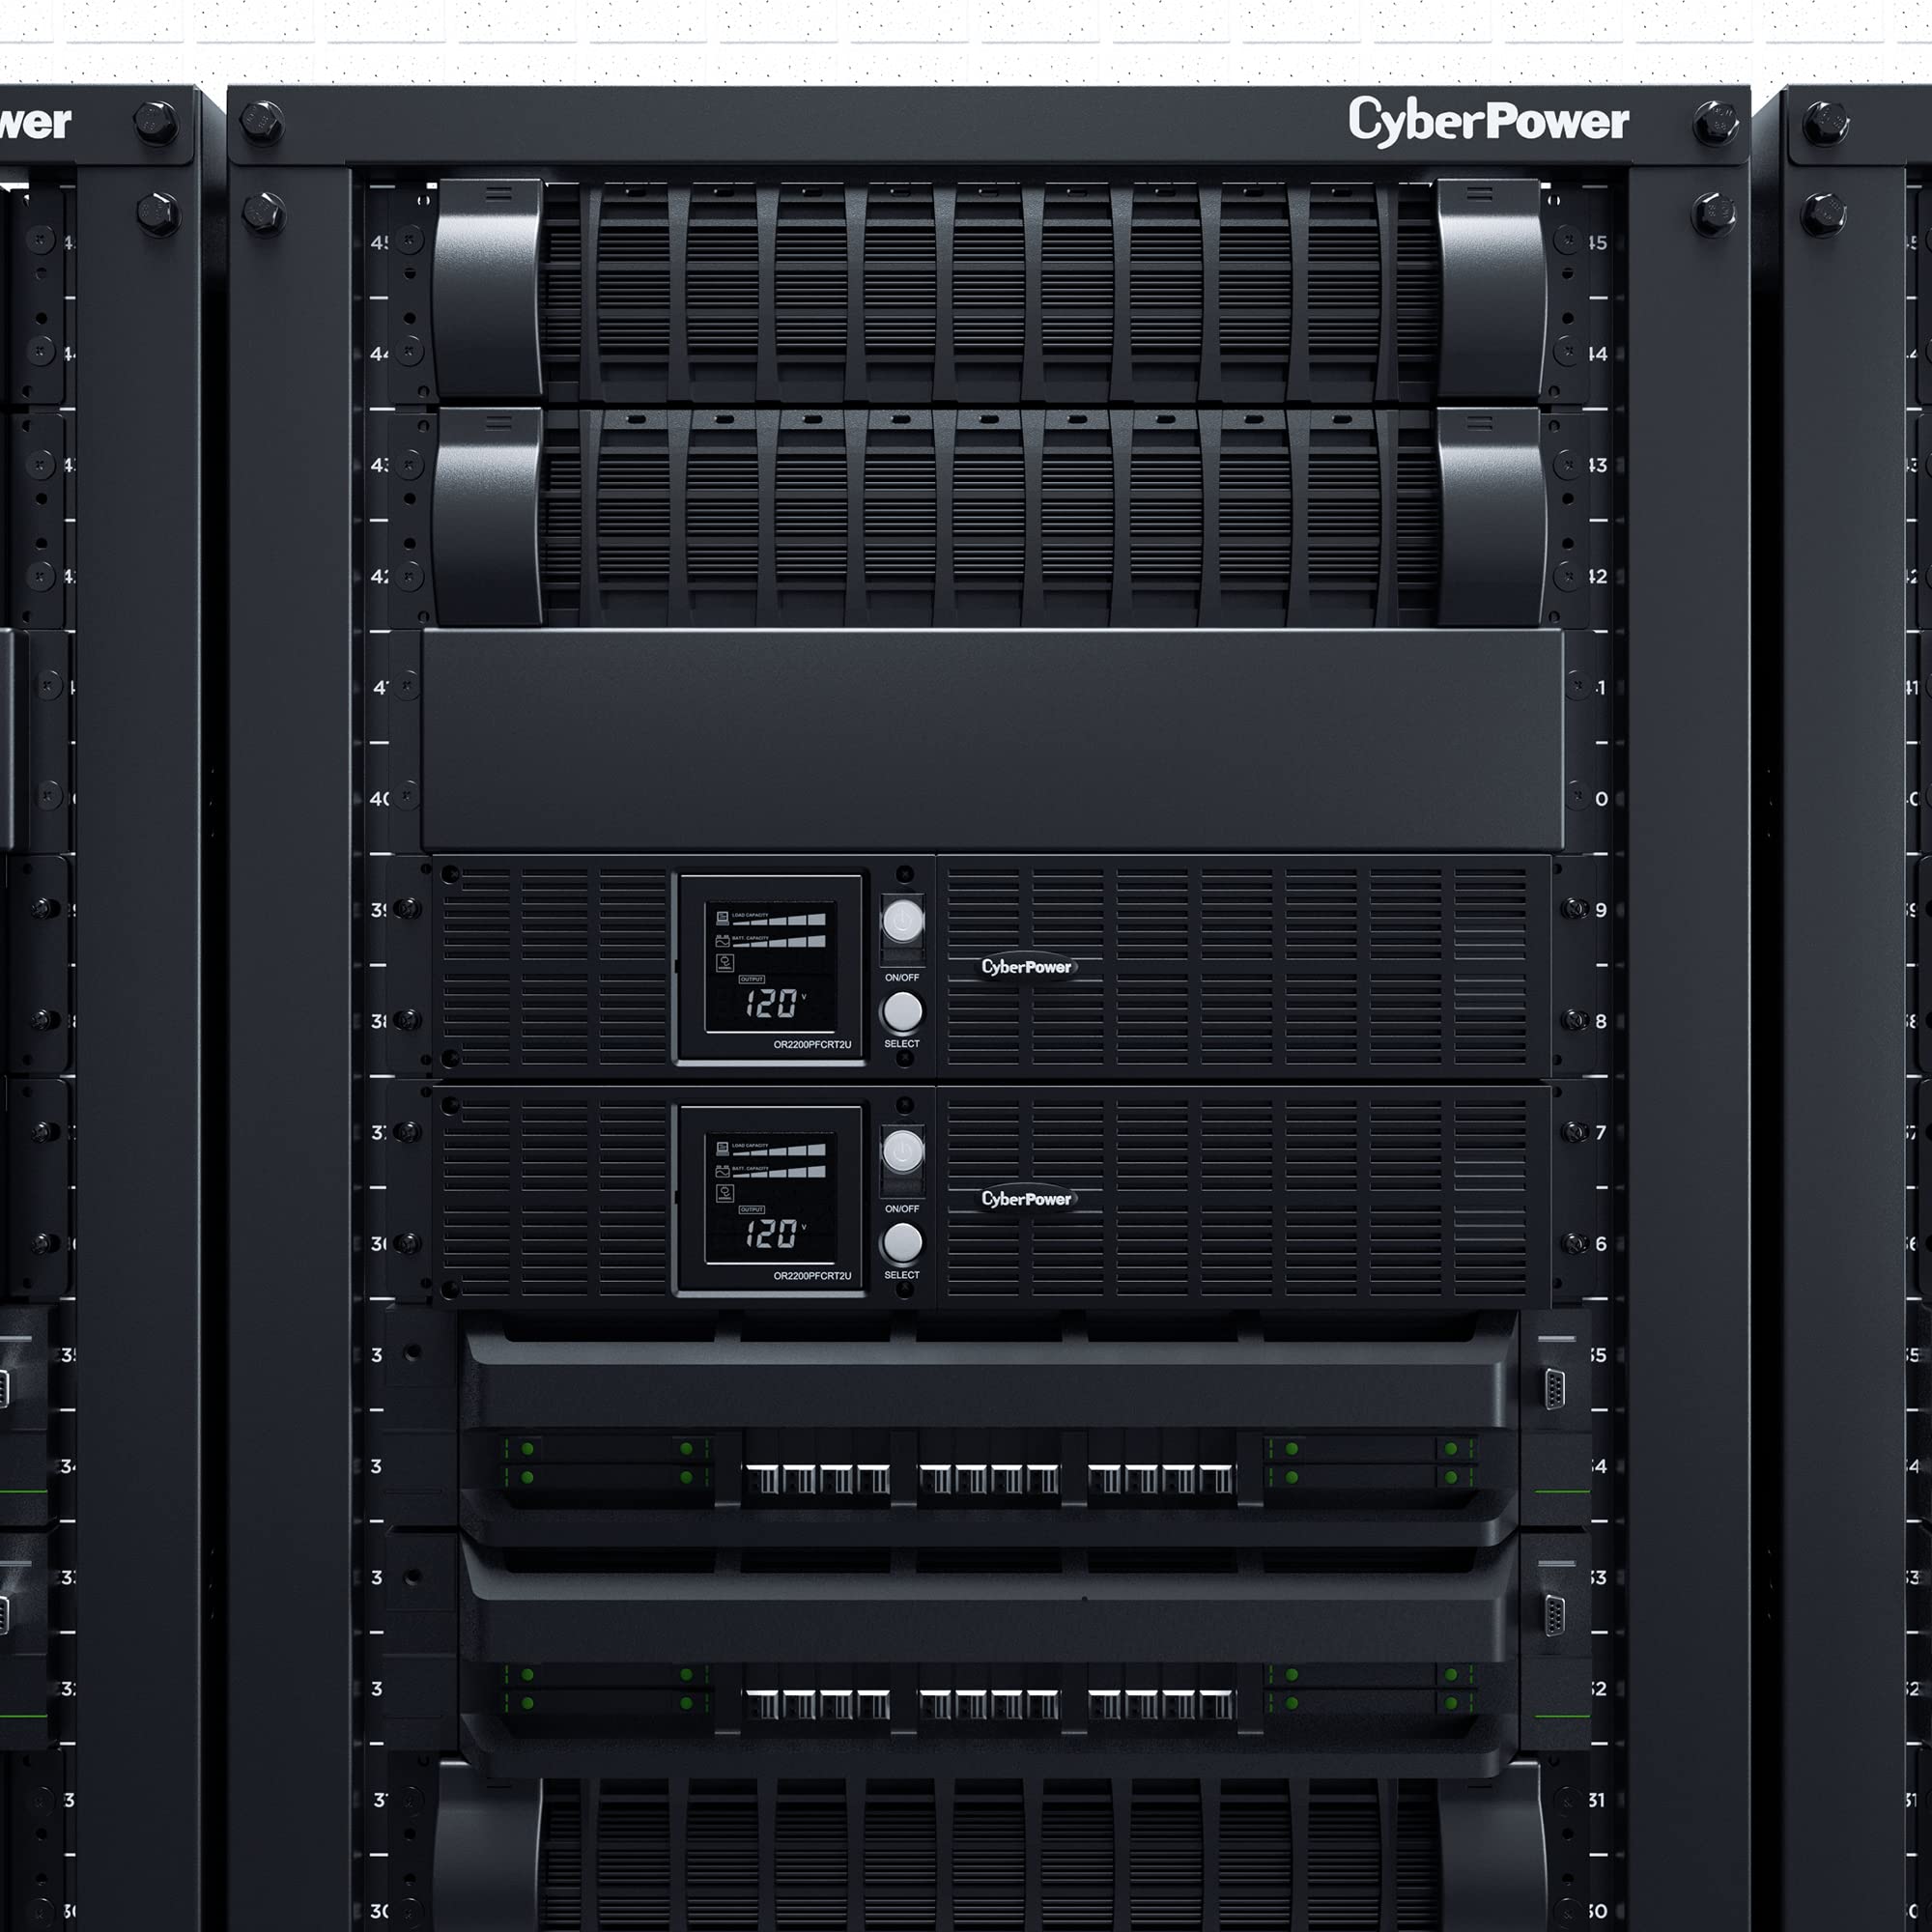 CyberPower OR2200PFCRT2U PFC Sinewave UPS System, 2000VA/1540W, 8 Outlets, AVR, 2U Rack/Tower